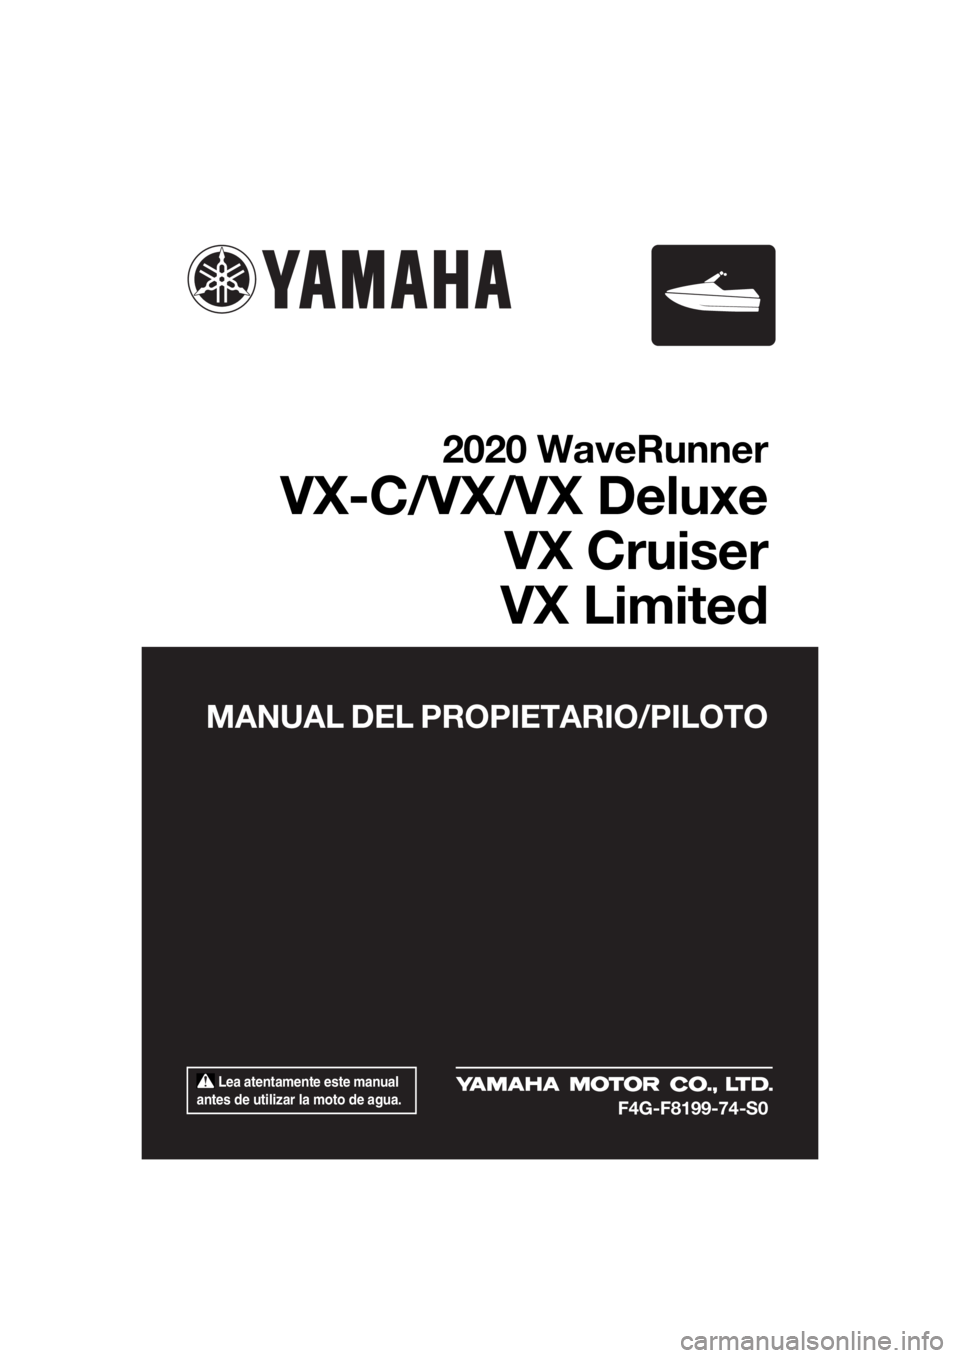 YAMAHA VX CRUISER 2020  Manuale de Empleo (in Spanish) 